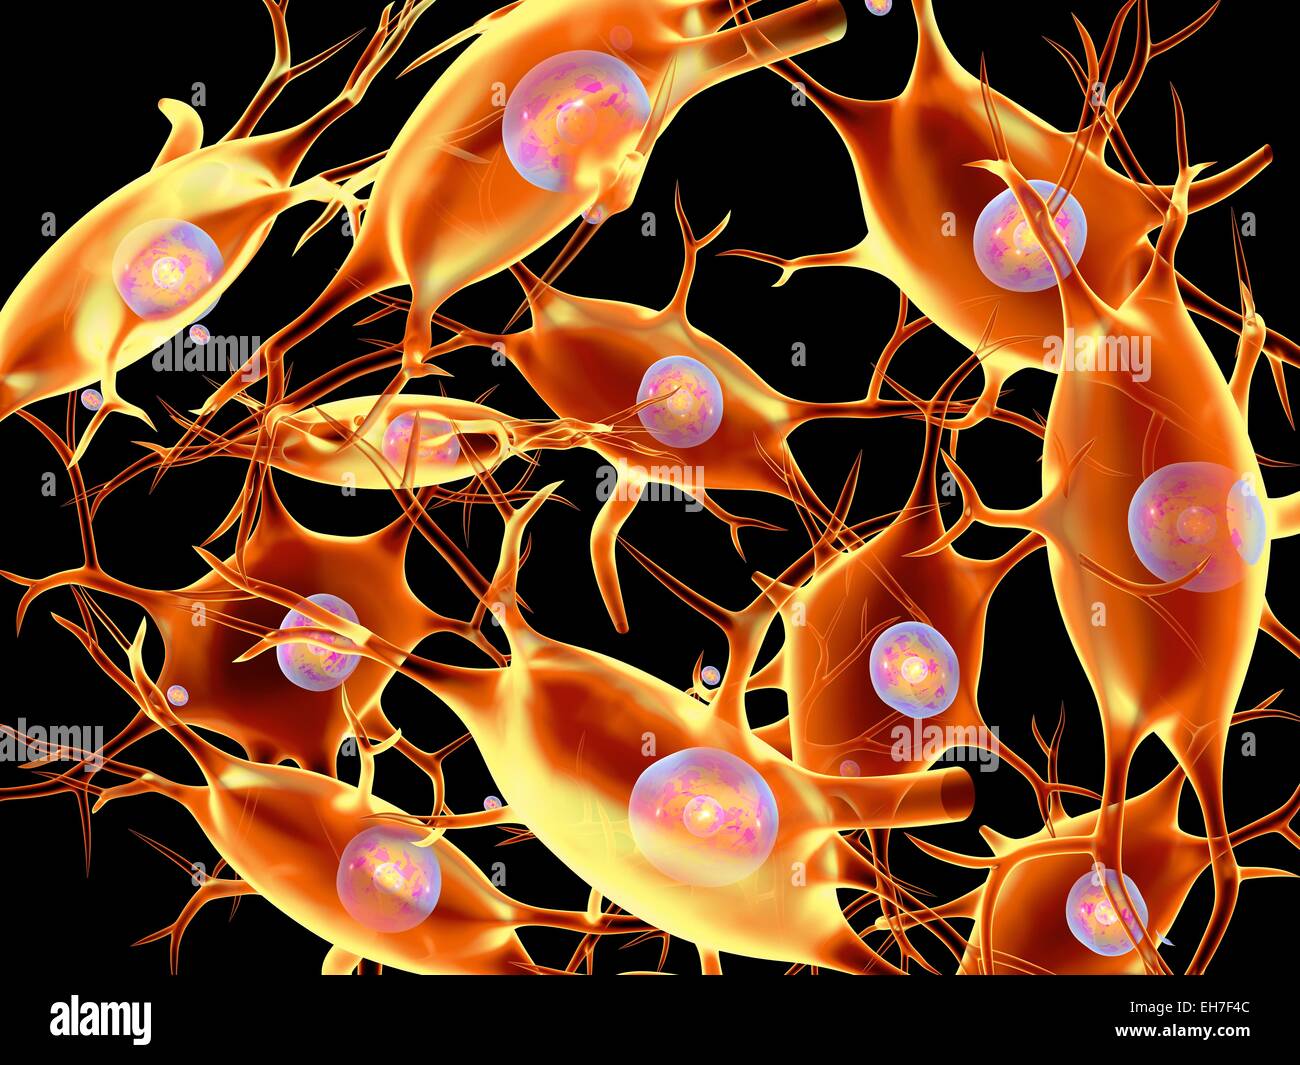 Neural tissue, artwork Stock Photo